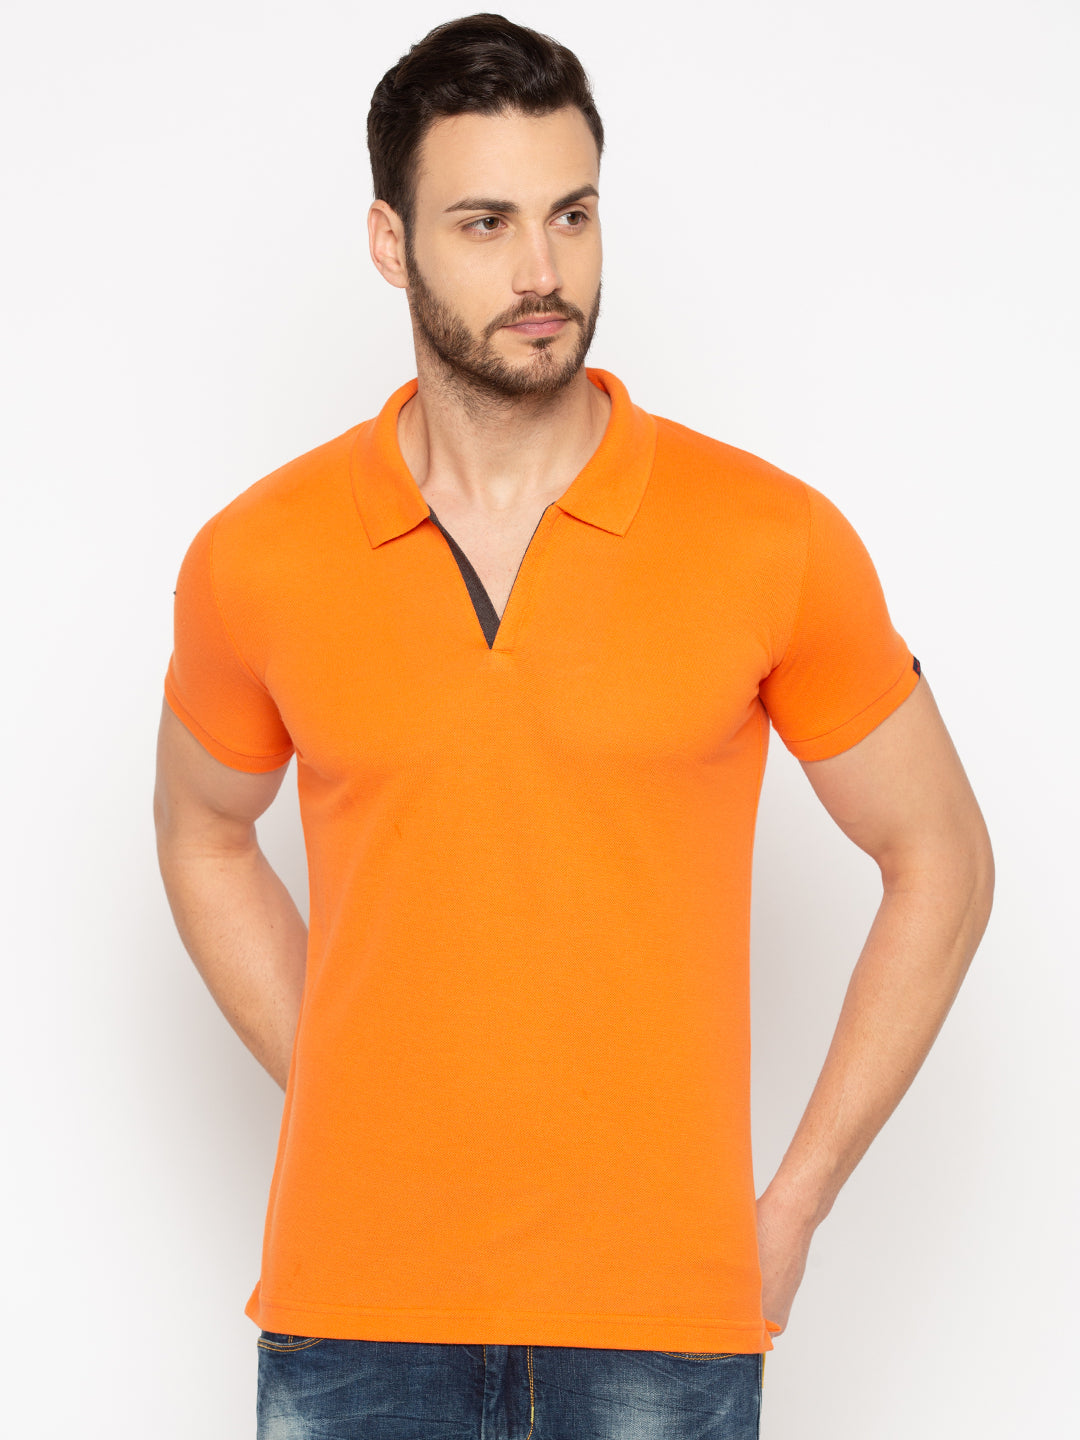 Candy Orange polo t shirt